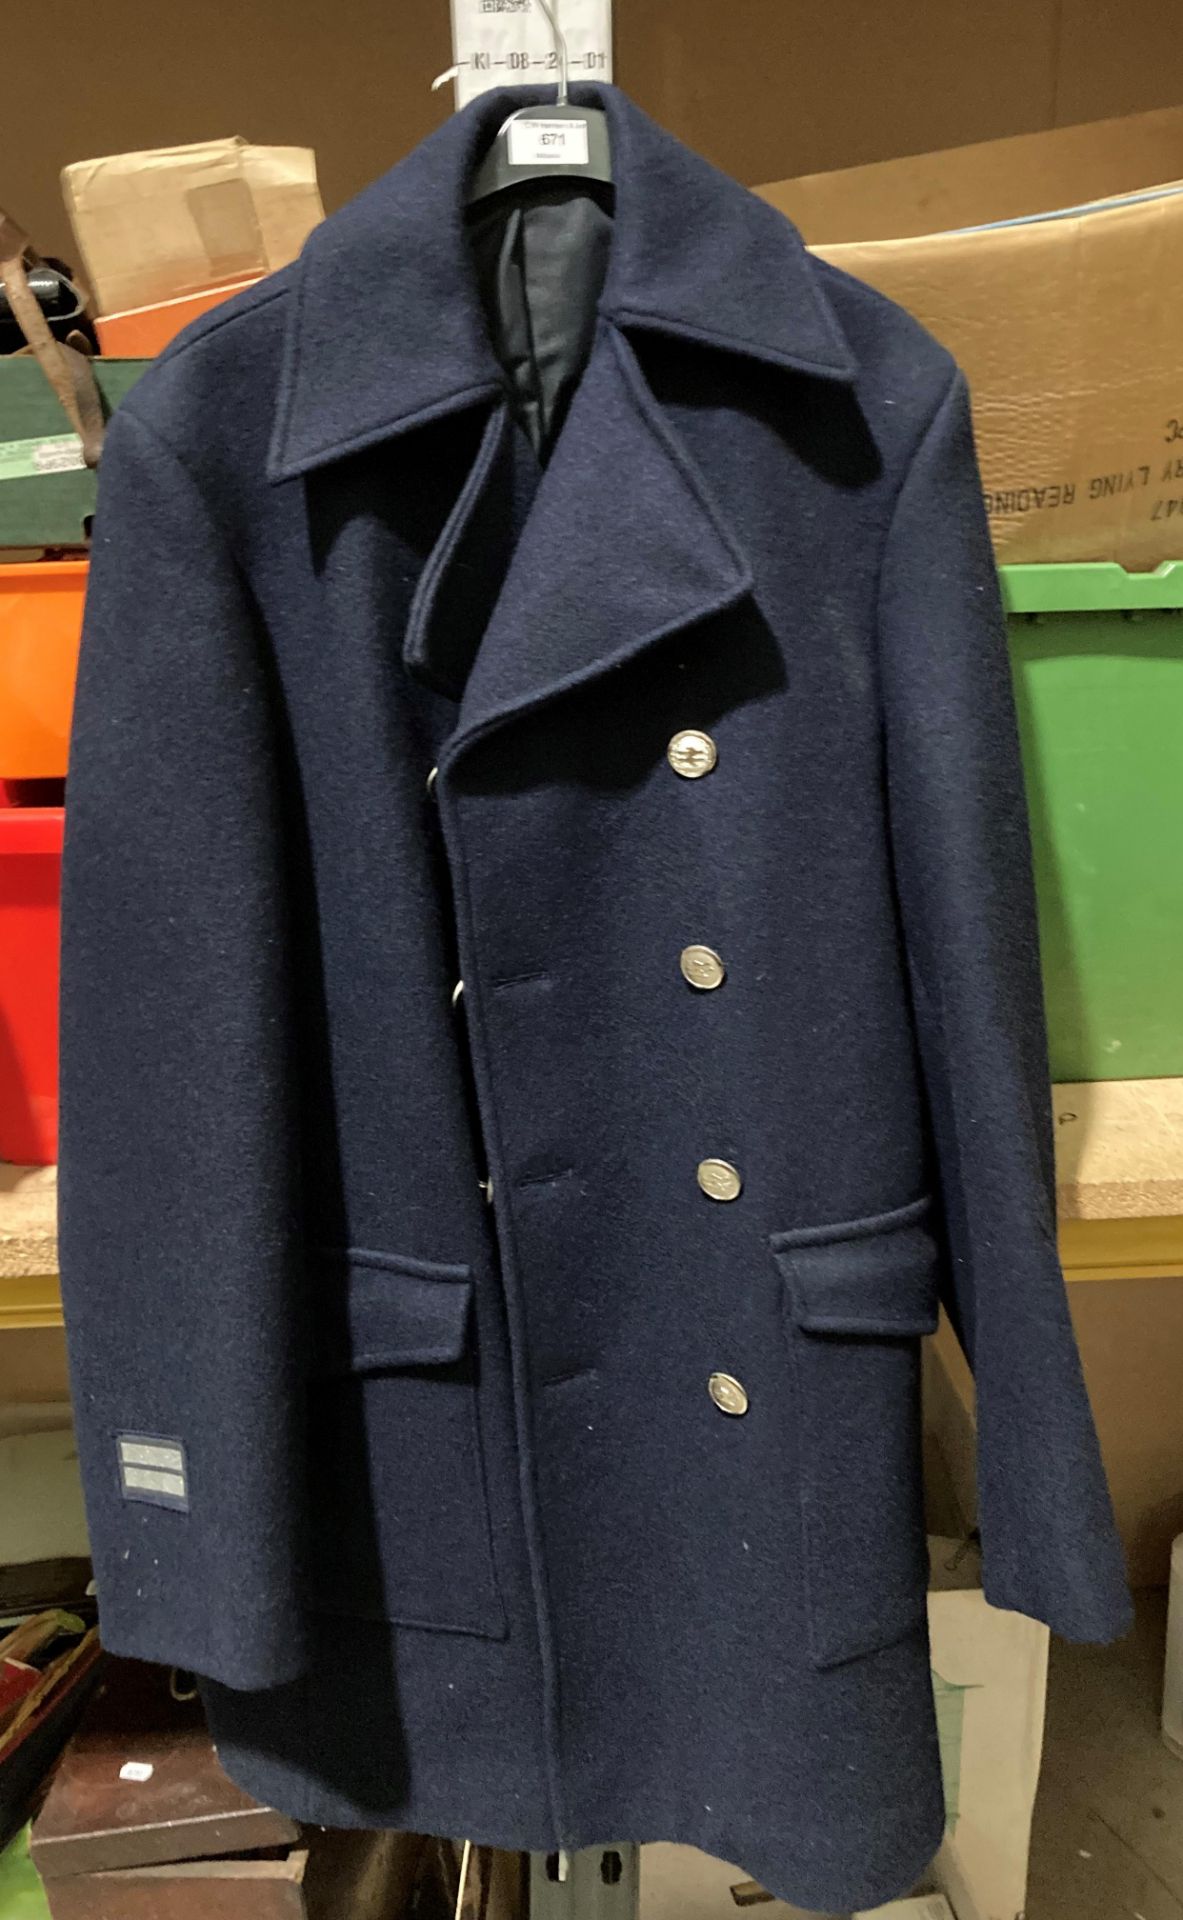 A British Rail overcoat in blue by Del Guerra Ltd, S.